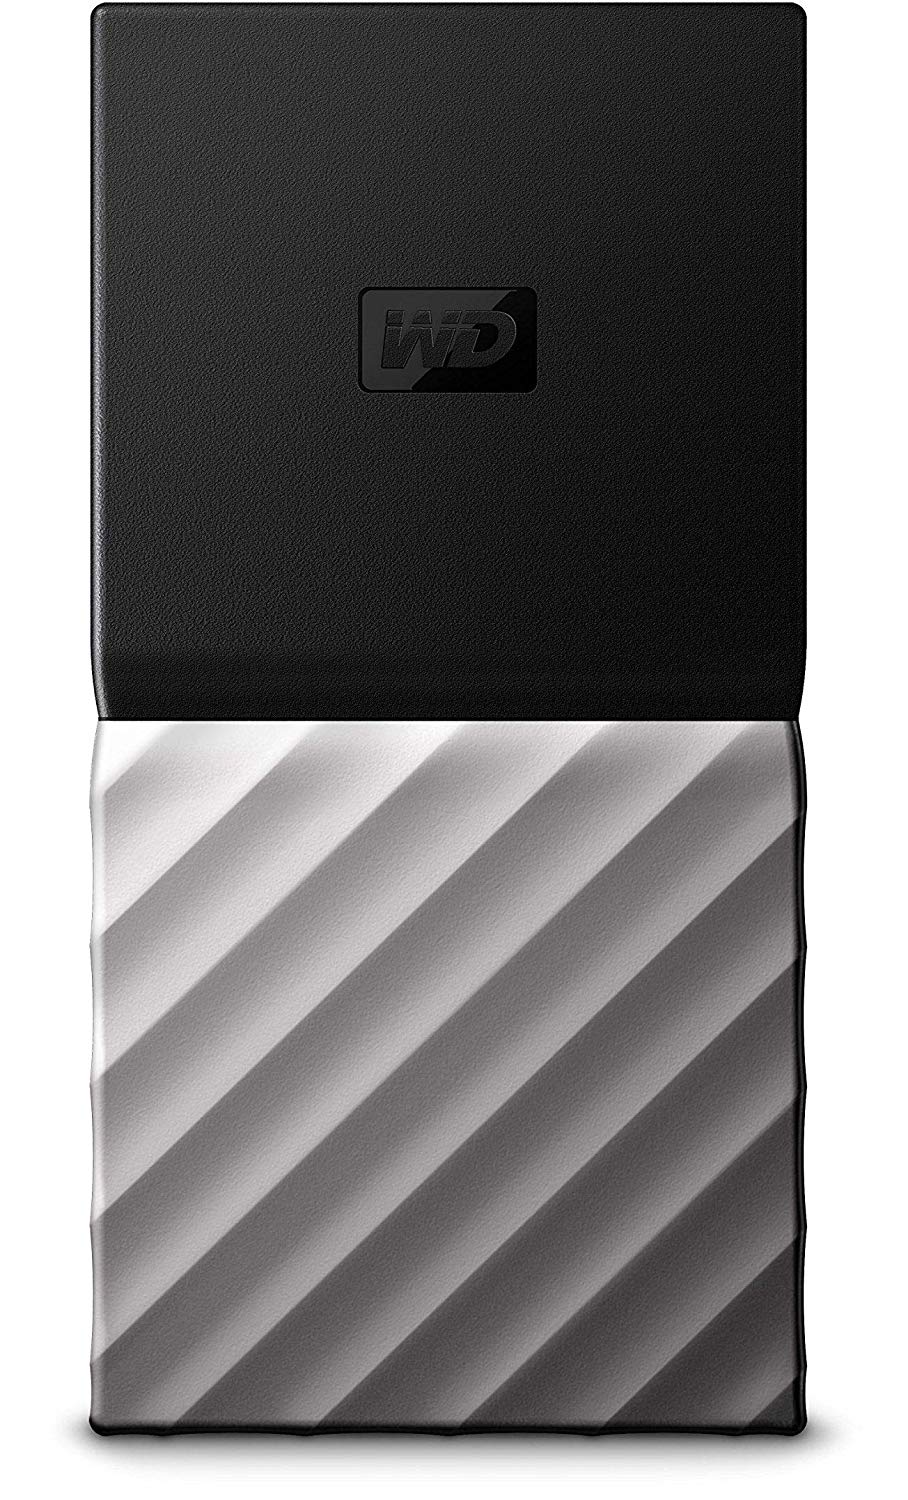 Western Digital Stockage portable SSD WD My Passport de 256 Go - USB 3.1 - Noir-Gris - WDBK3E2560PSL-WESN